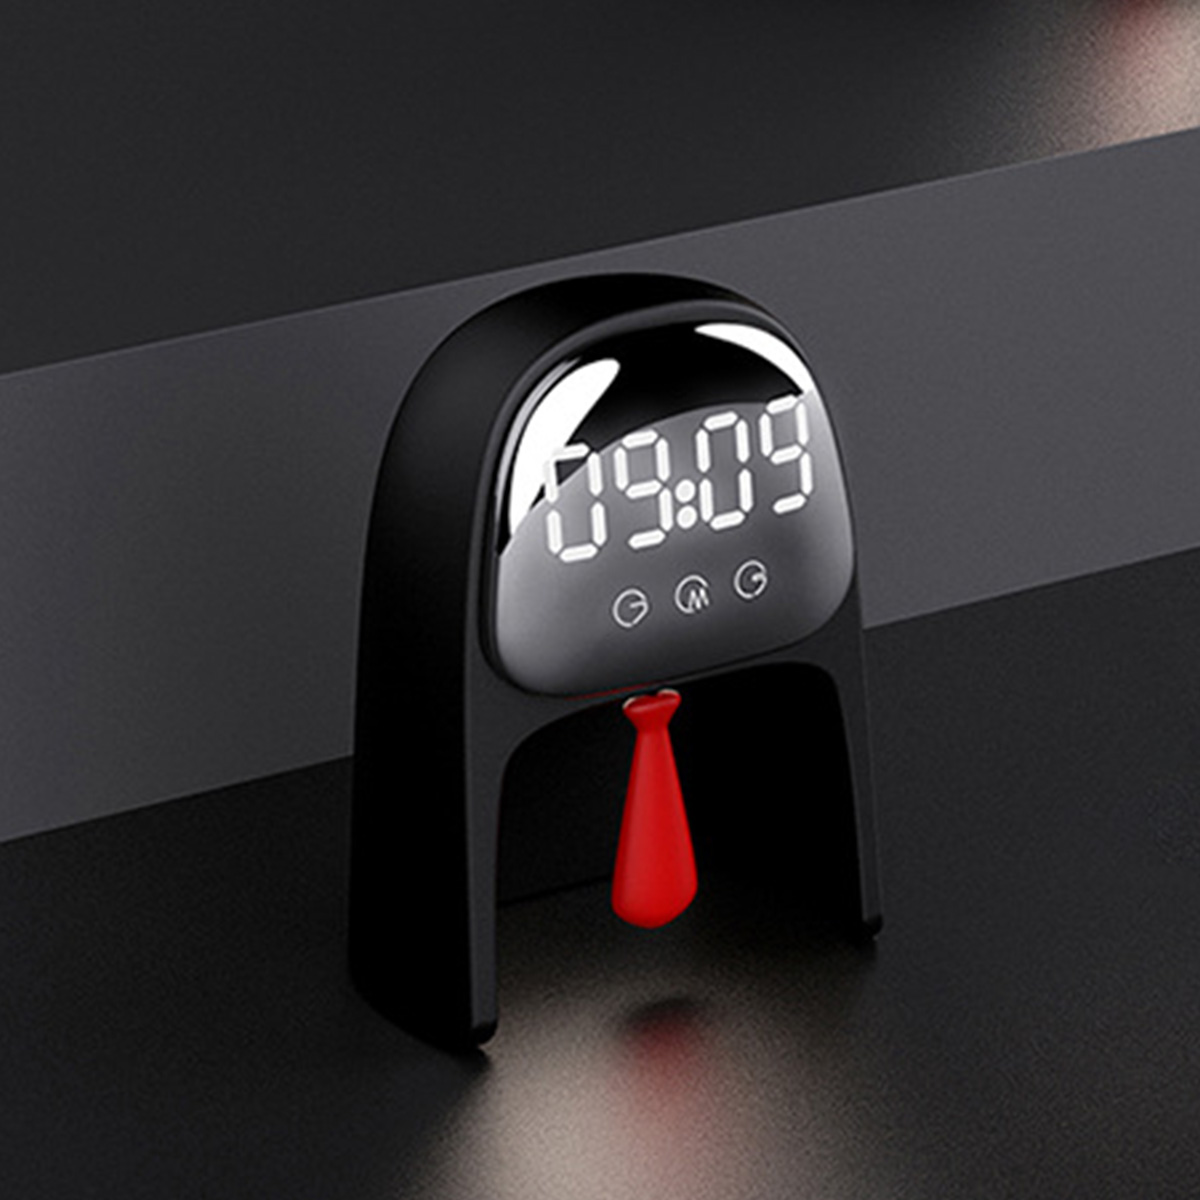 

Creative Design Gentleman Alarm Clock Digital Snooze Table Clock Voice Induction Function Press Control Home Decoration